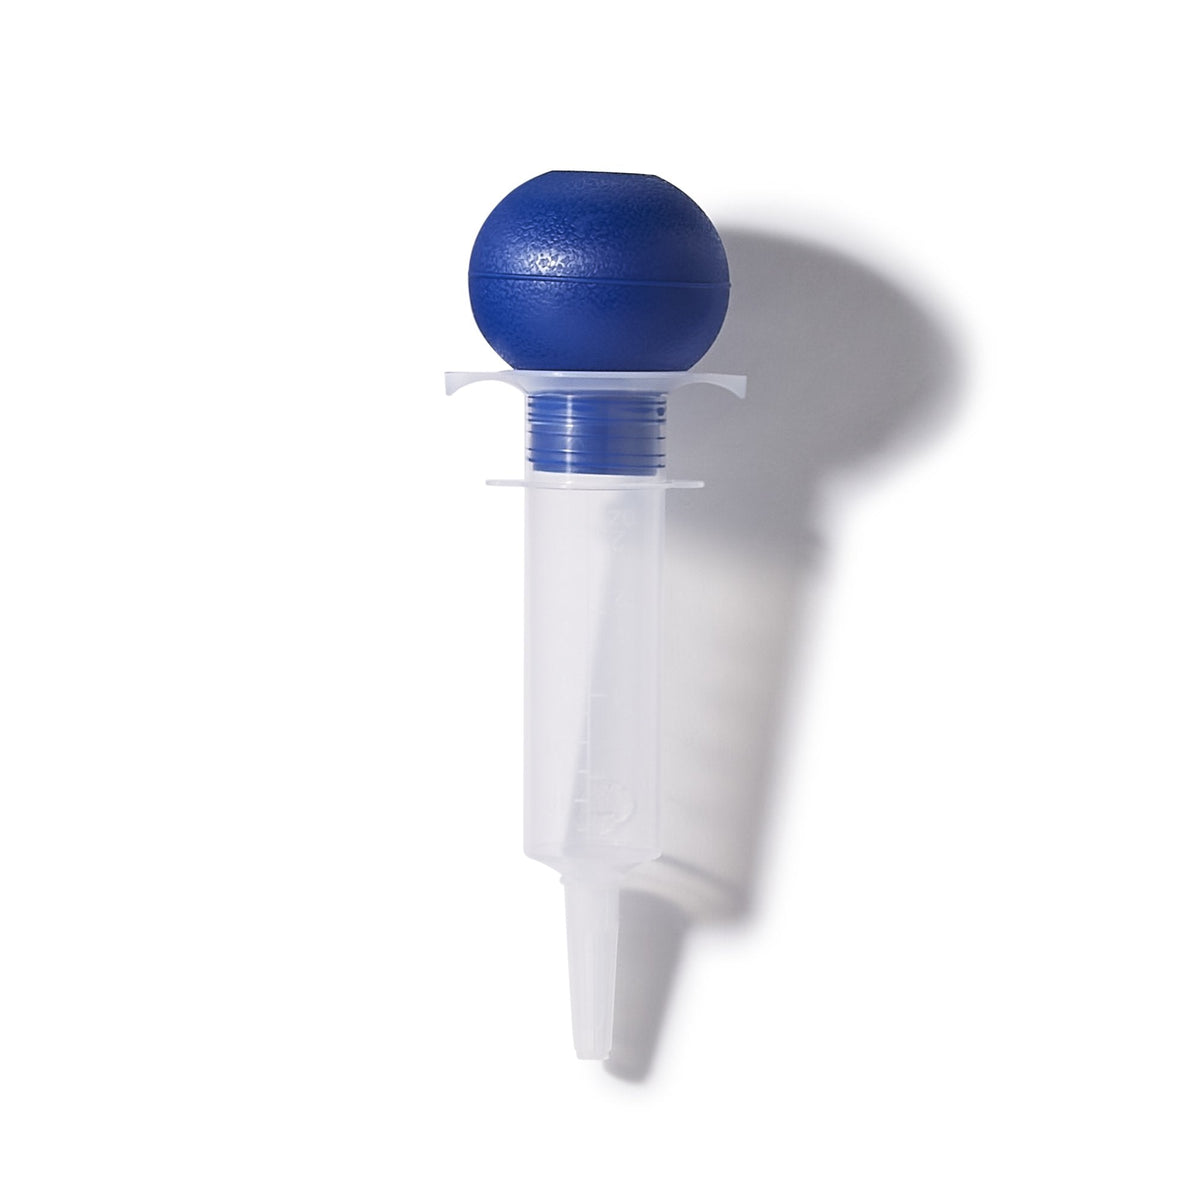 McKesson Irrigation Bulb Syringe - American Hospital Supply